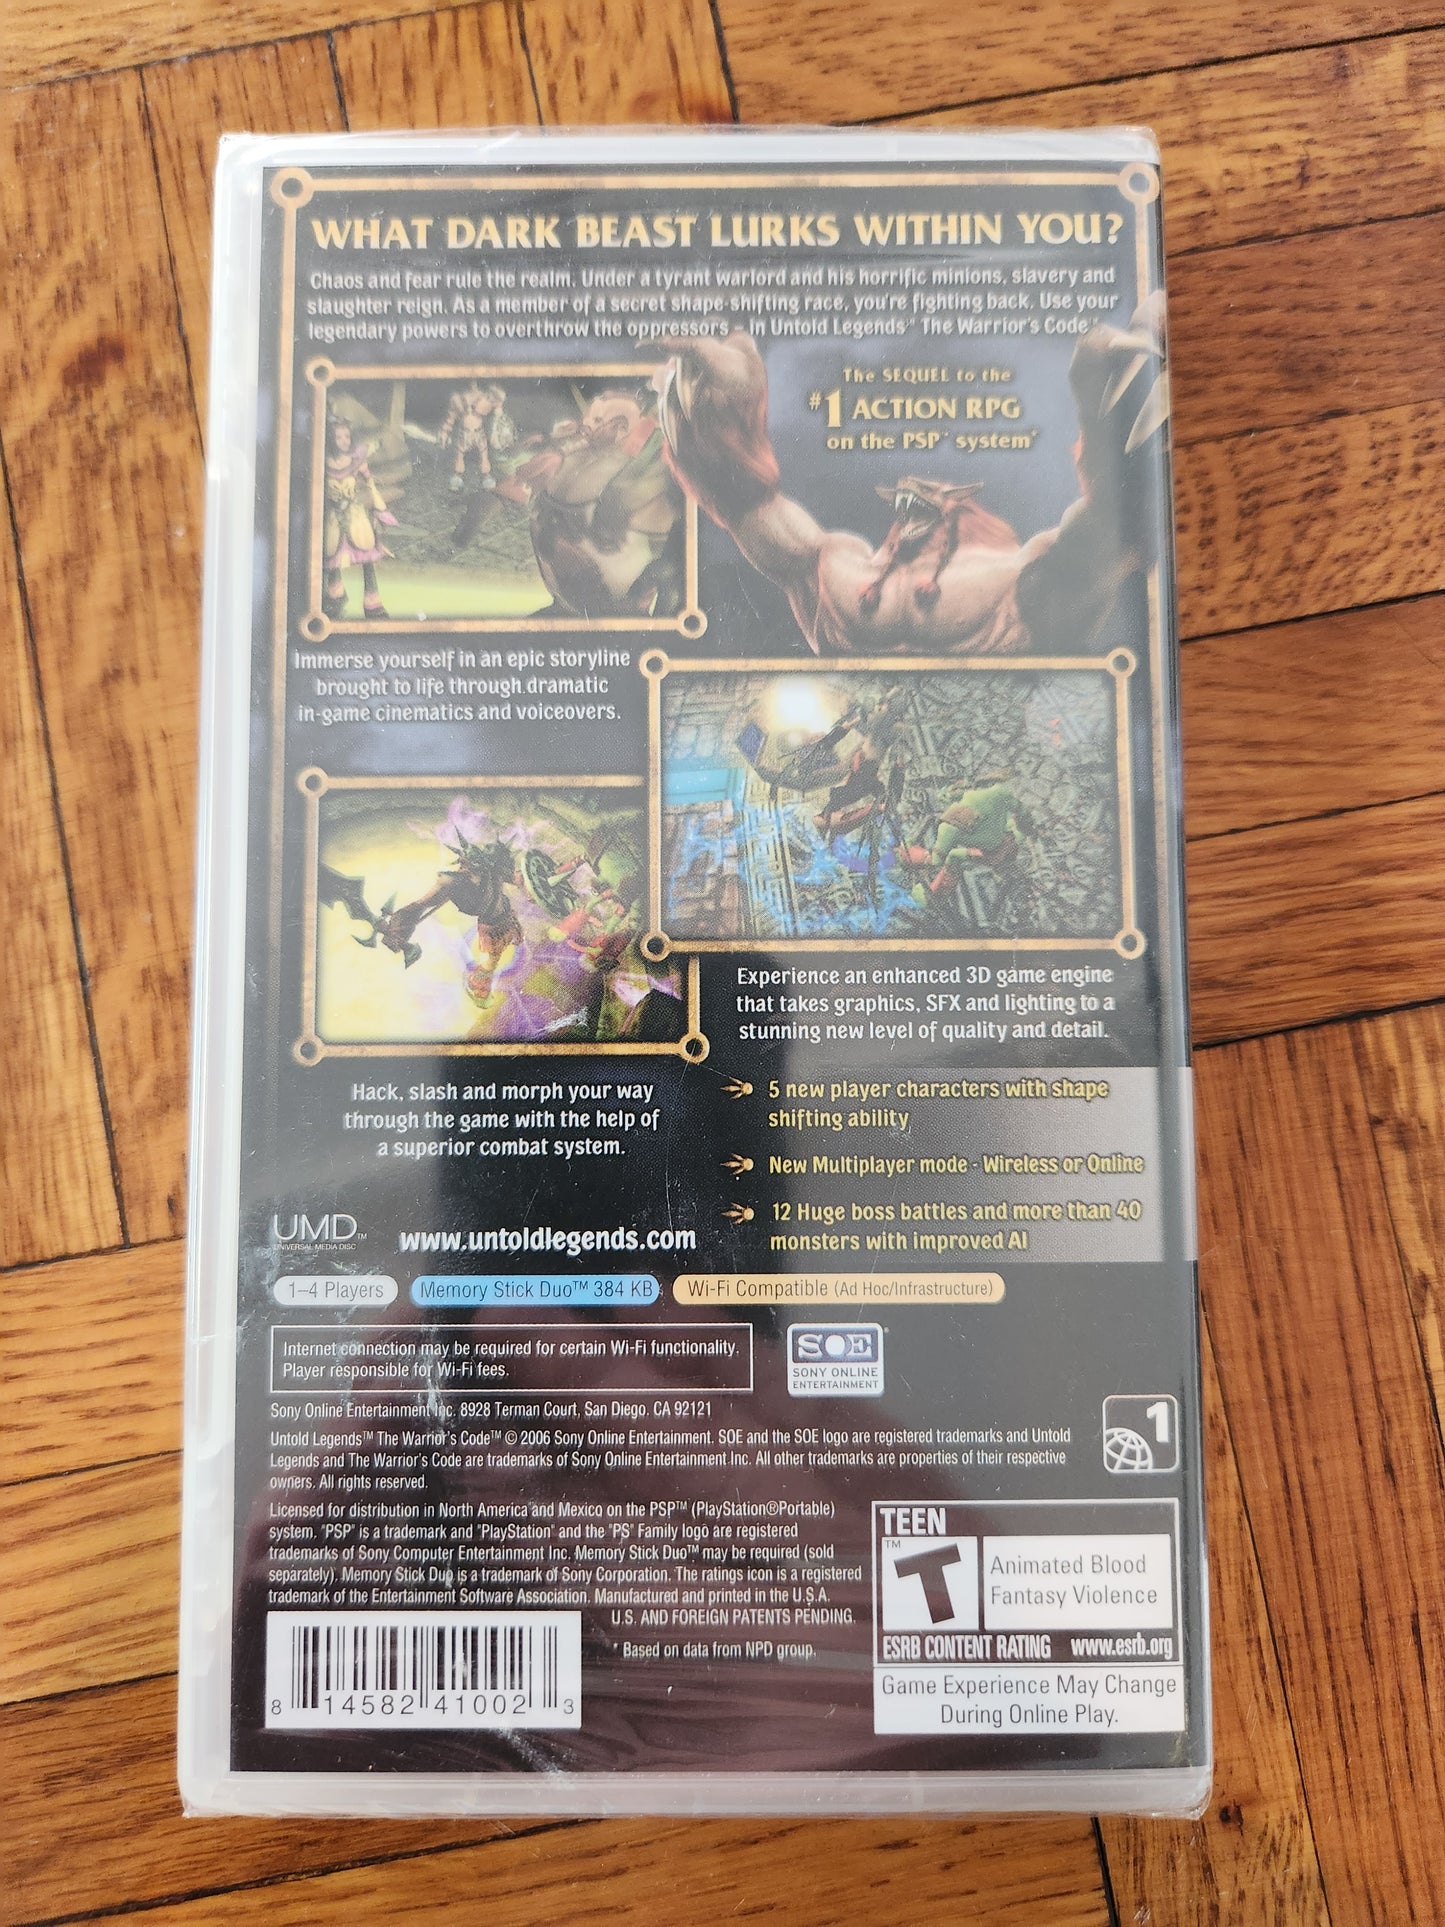 NIB - PSP "Untold Legends: The Warrior's Code"